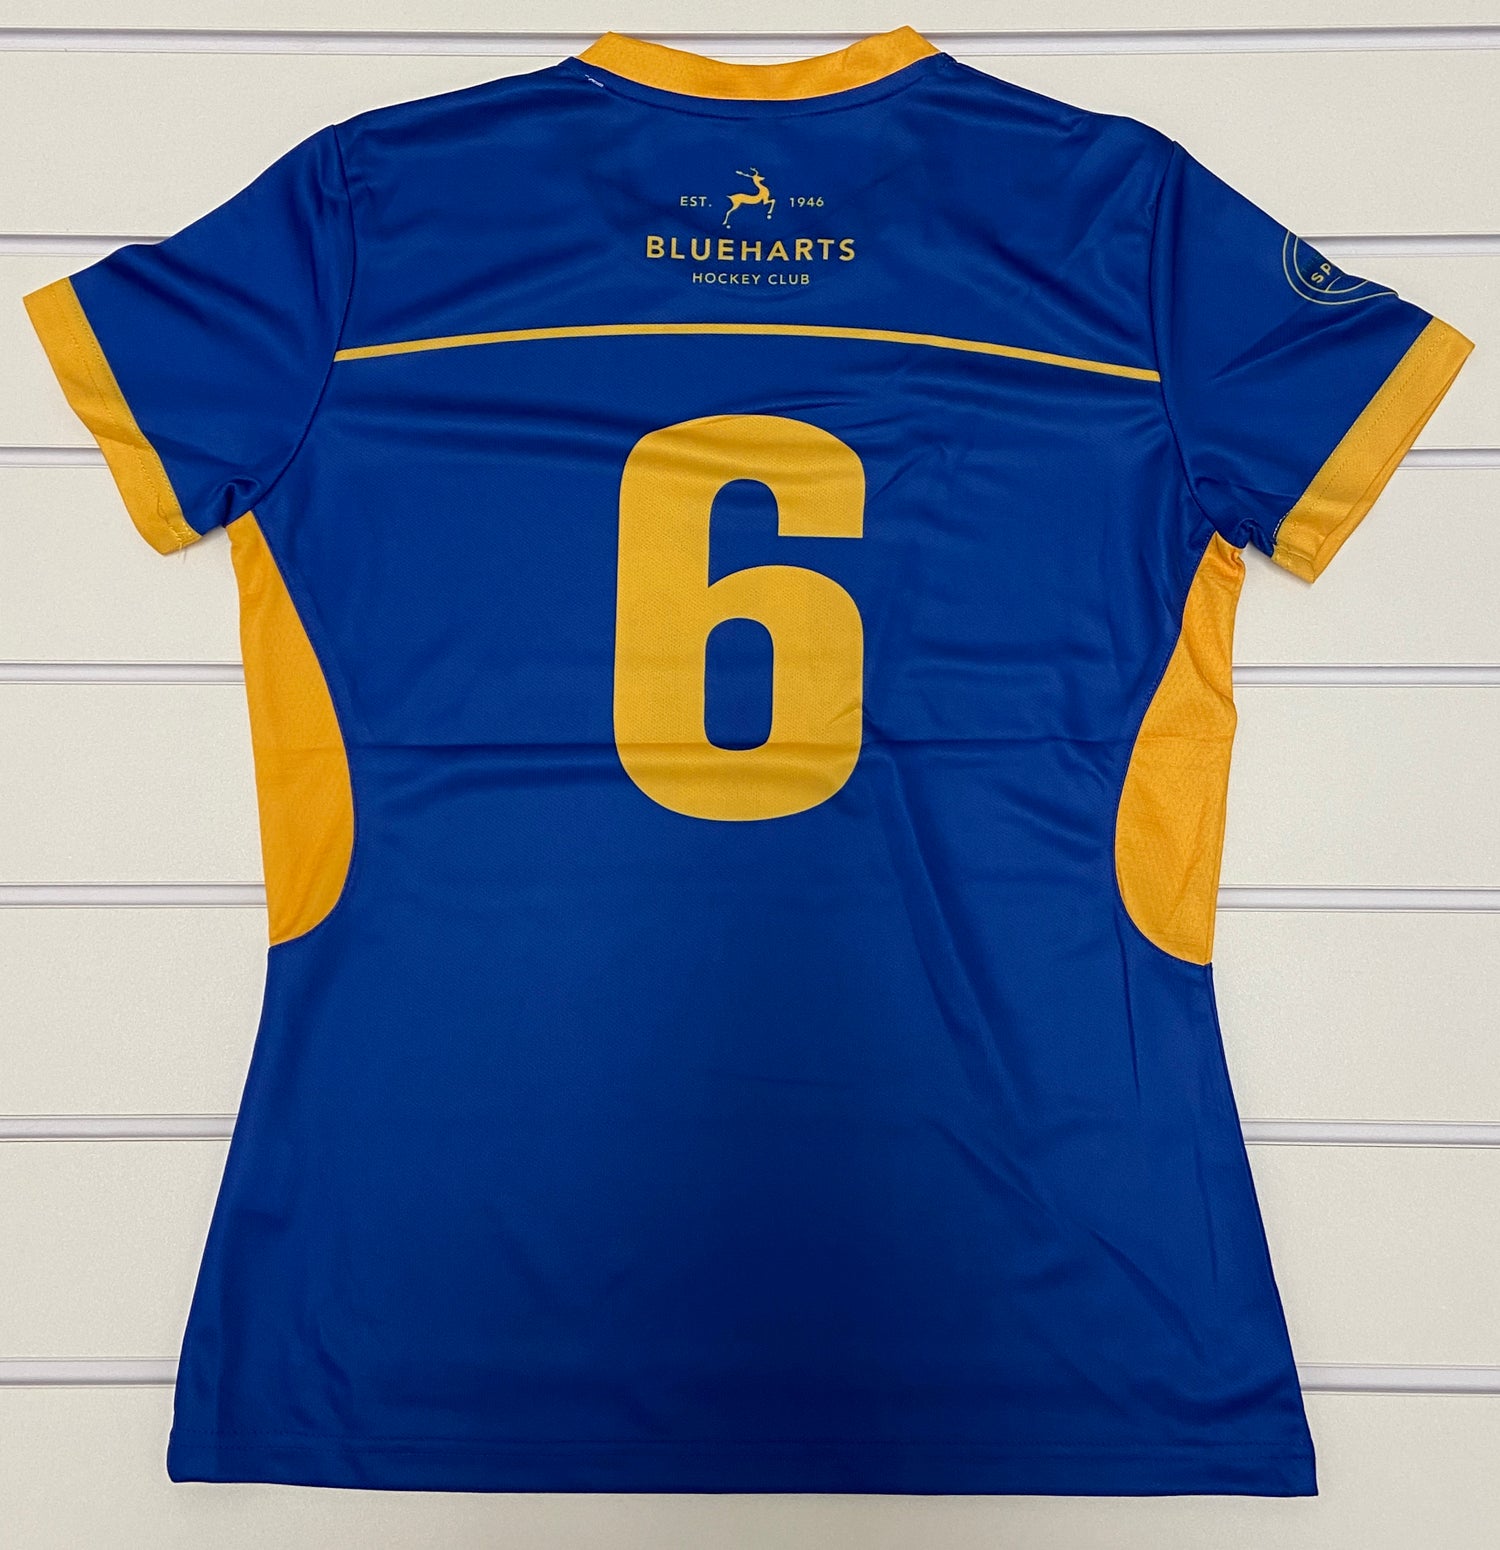 Blueharts Women's Home Playing Shirt (X-Large, size 16-18)